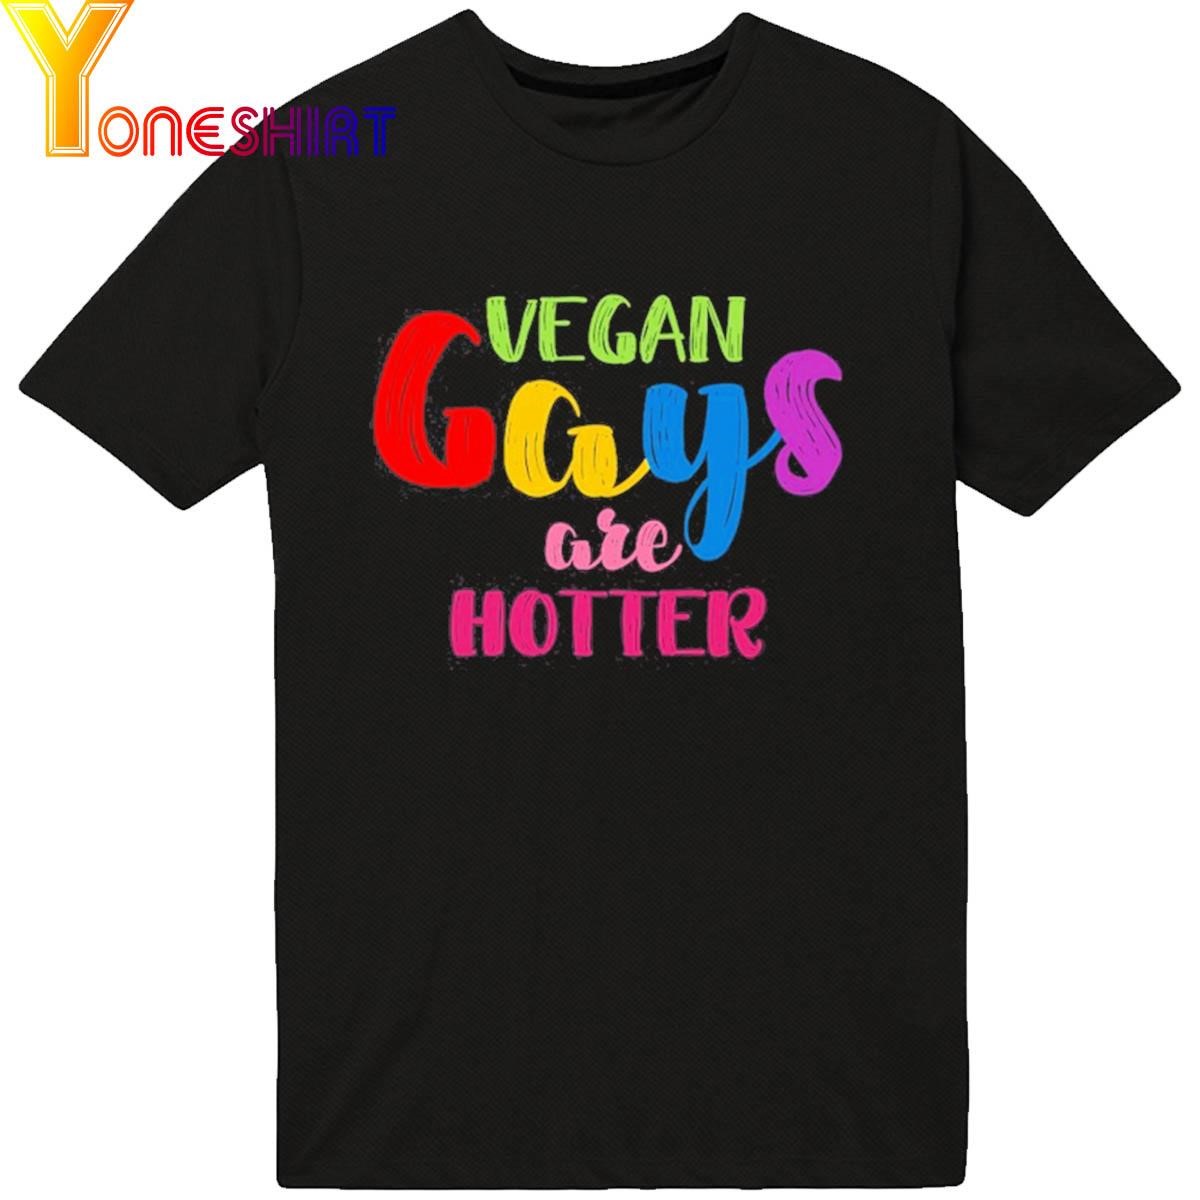 Vegan Gays Are Hotter shirt